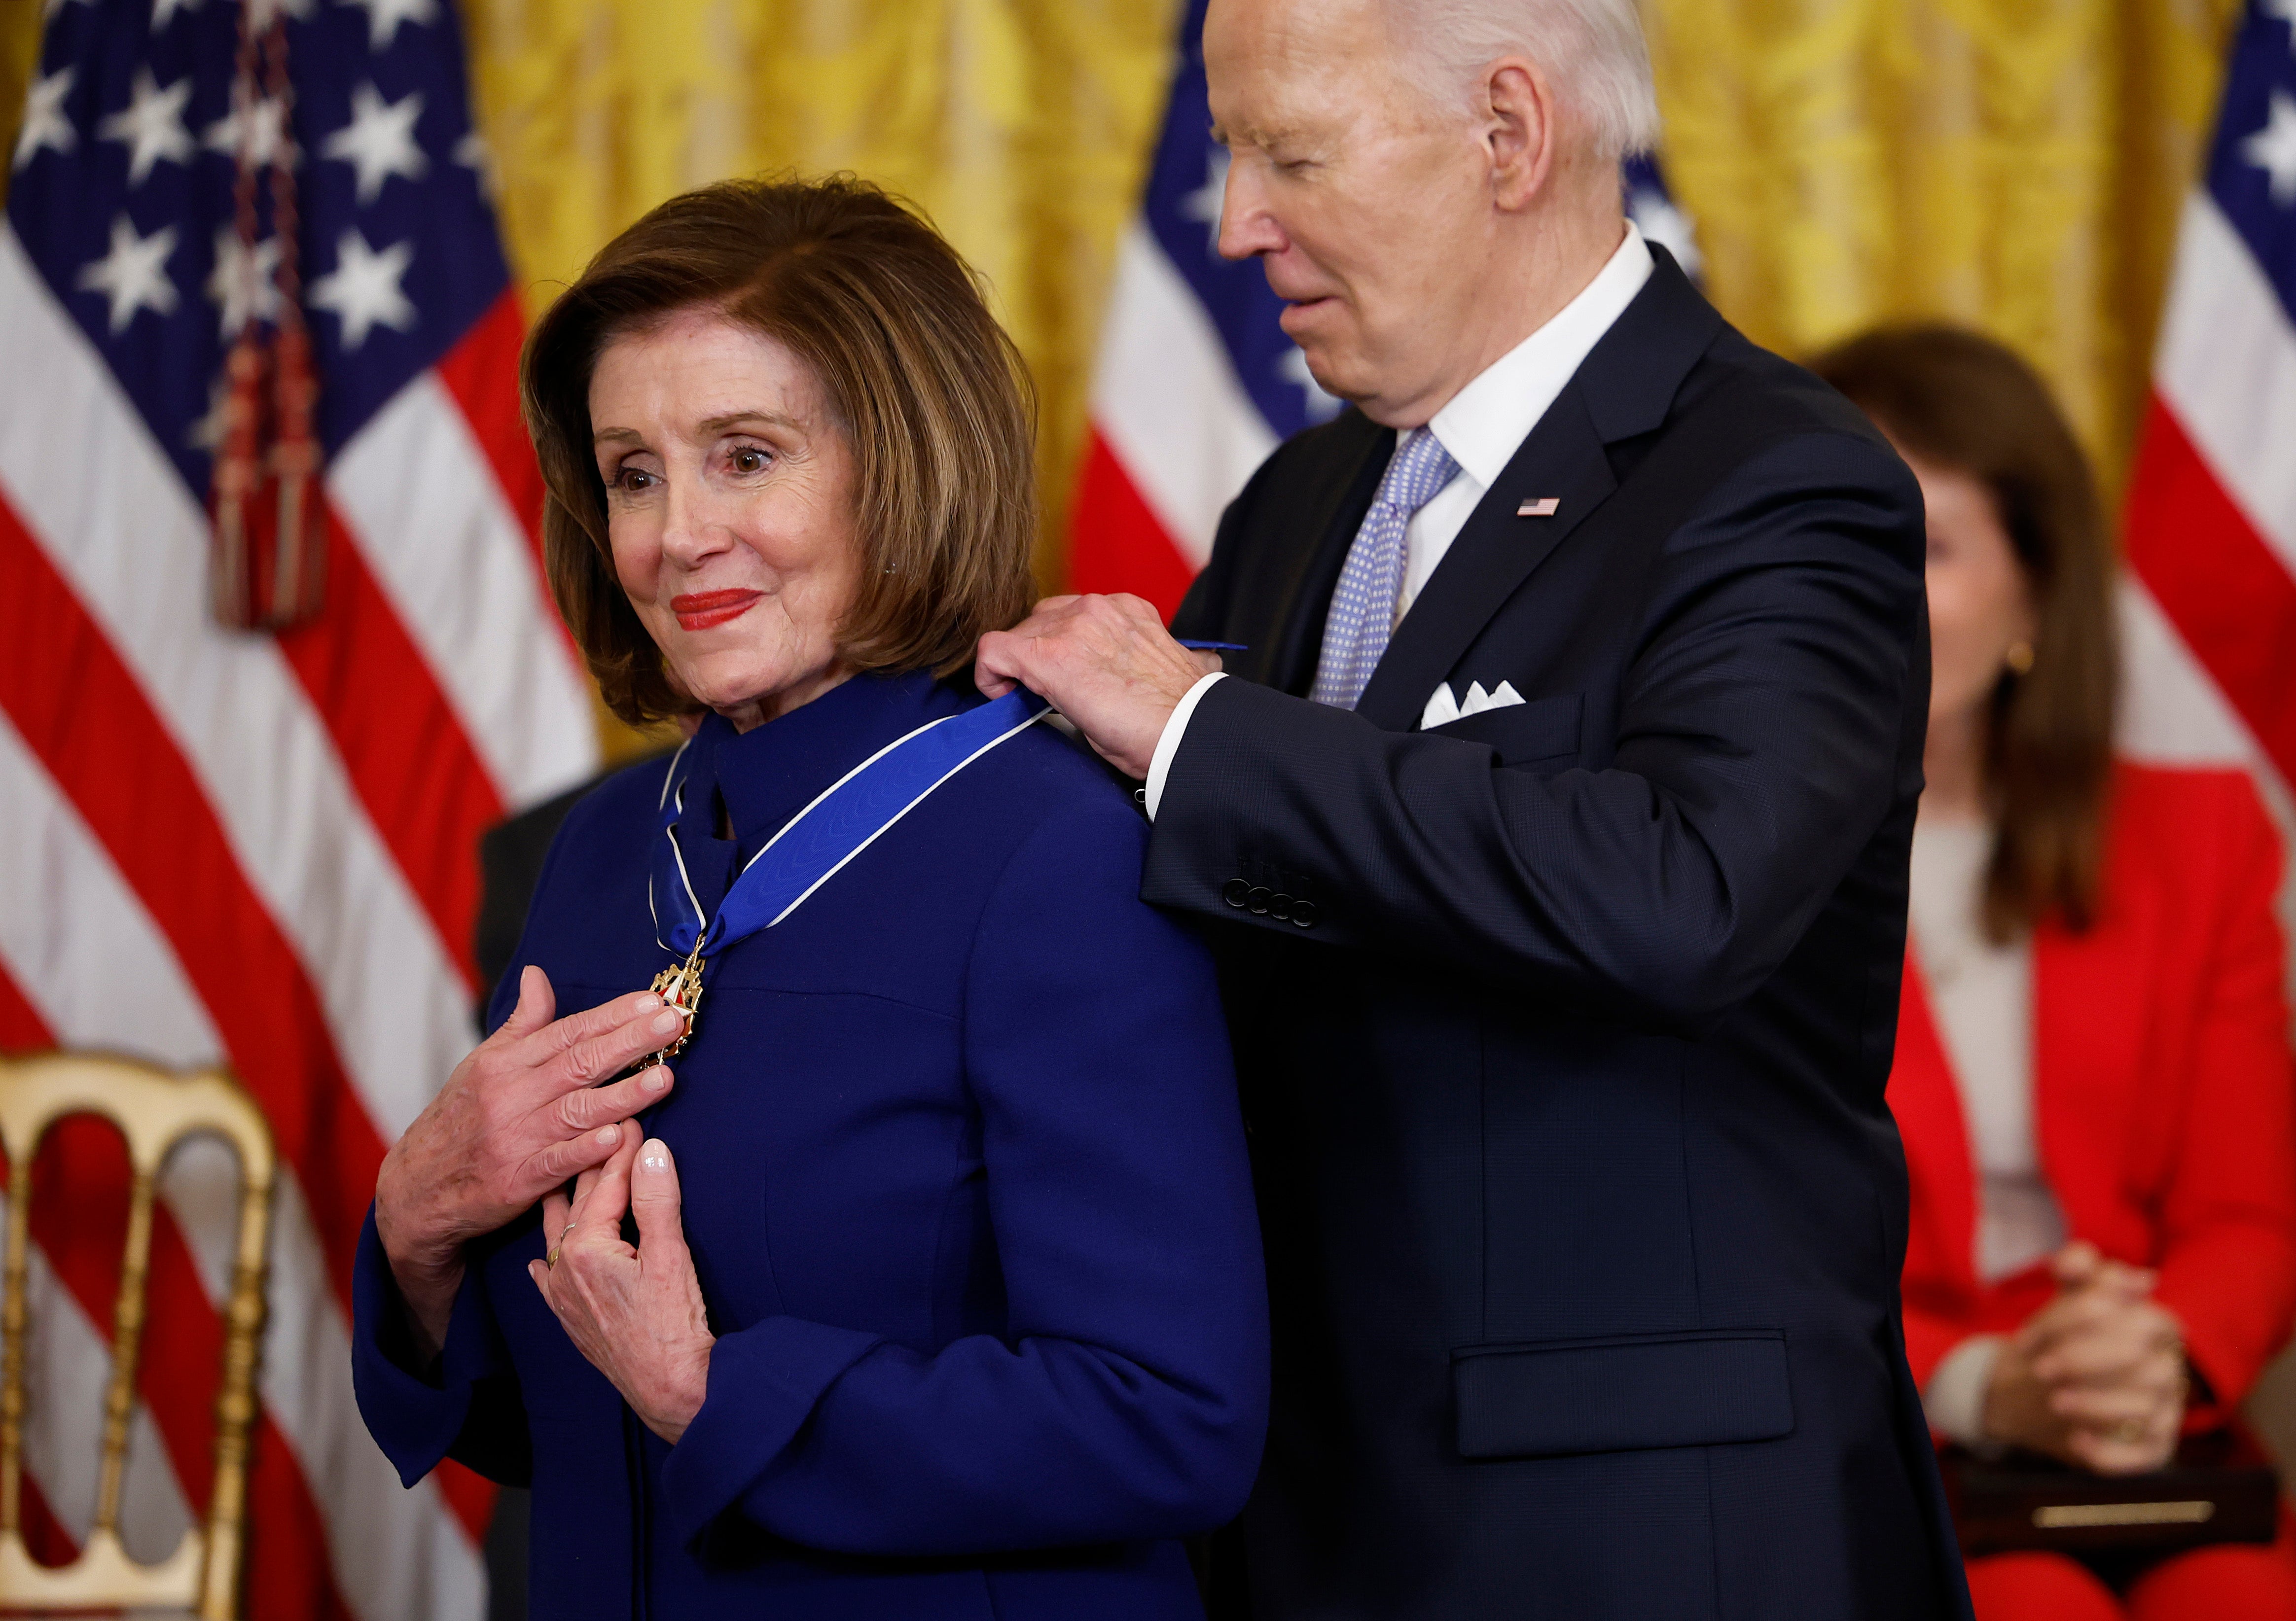 Former Speaker of the House Nancy Pelosi has been equivocal in her support for President Joe Biden.